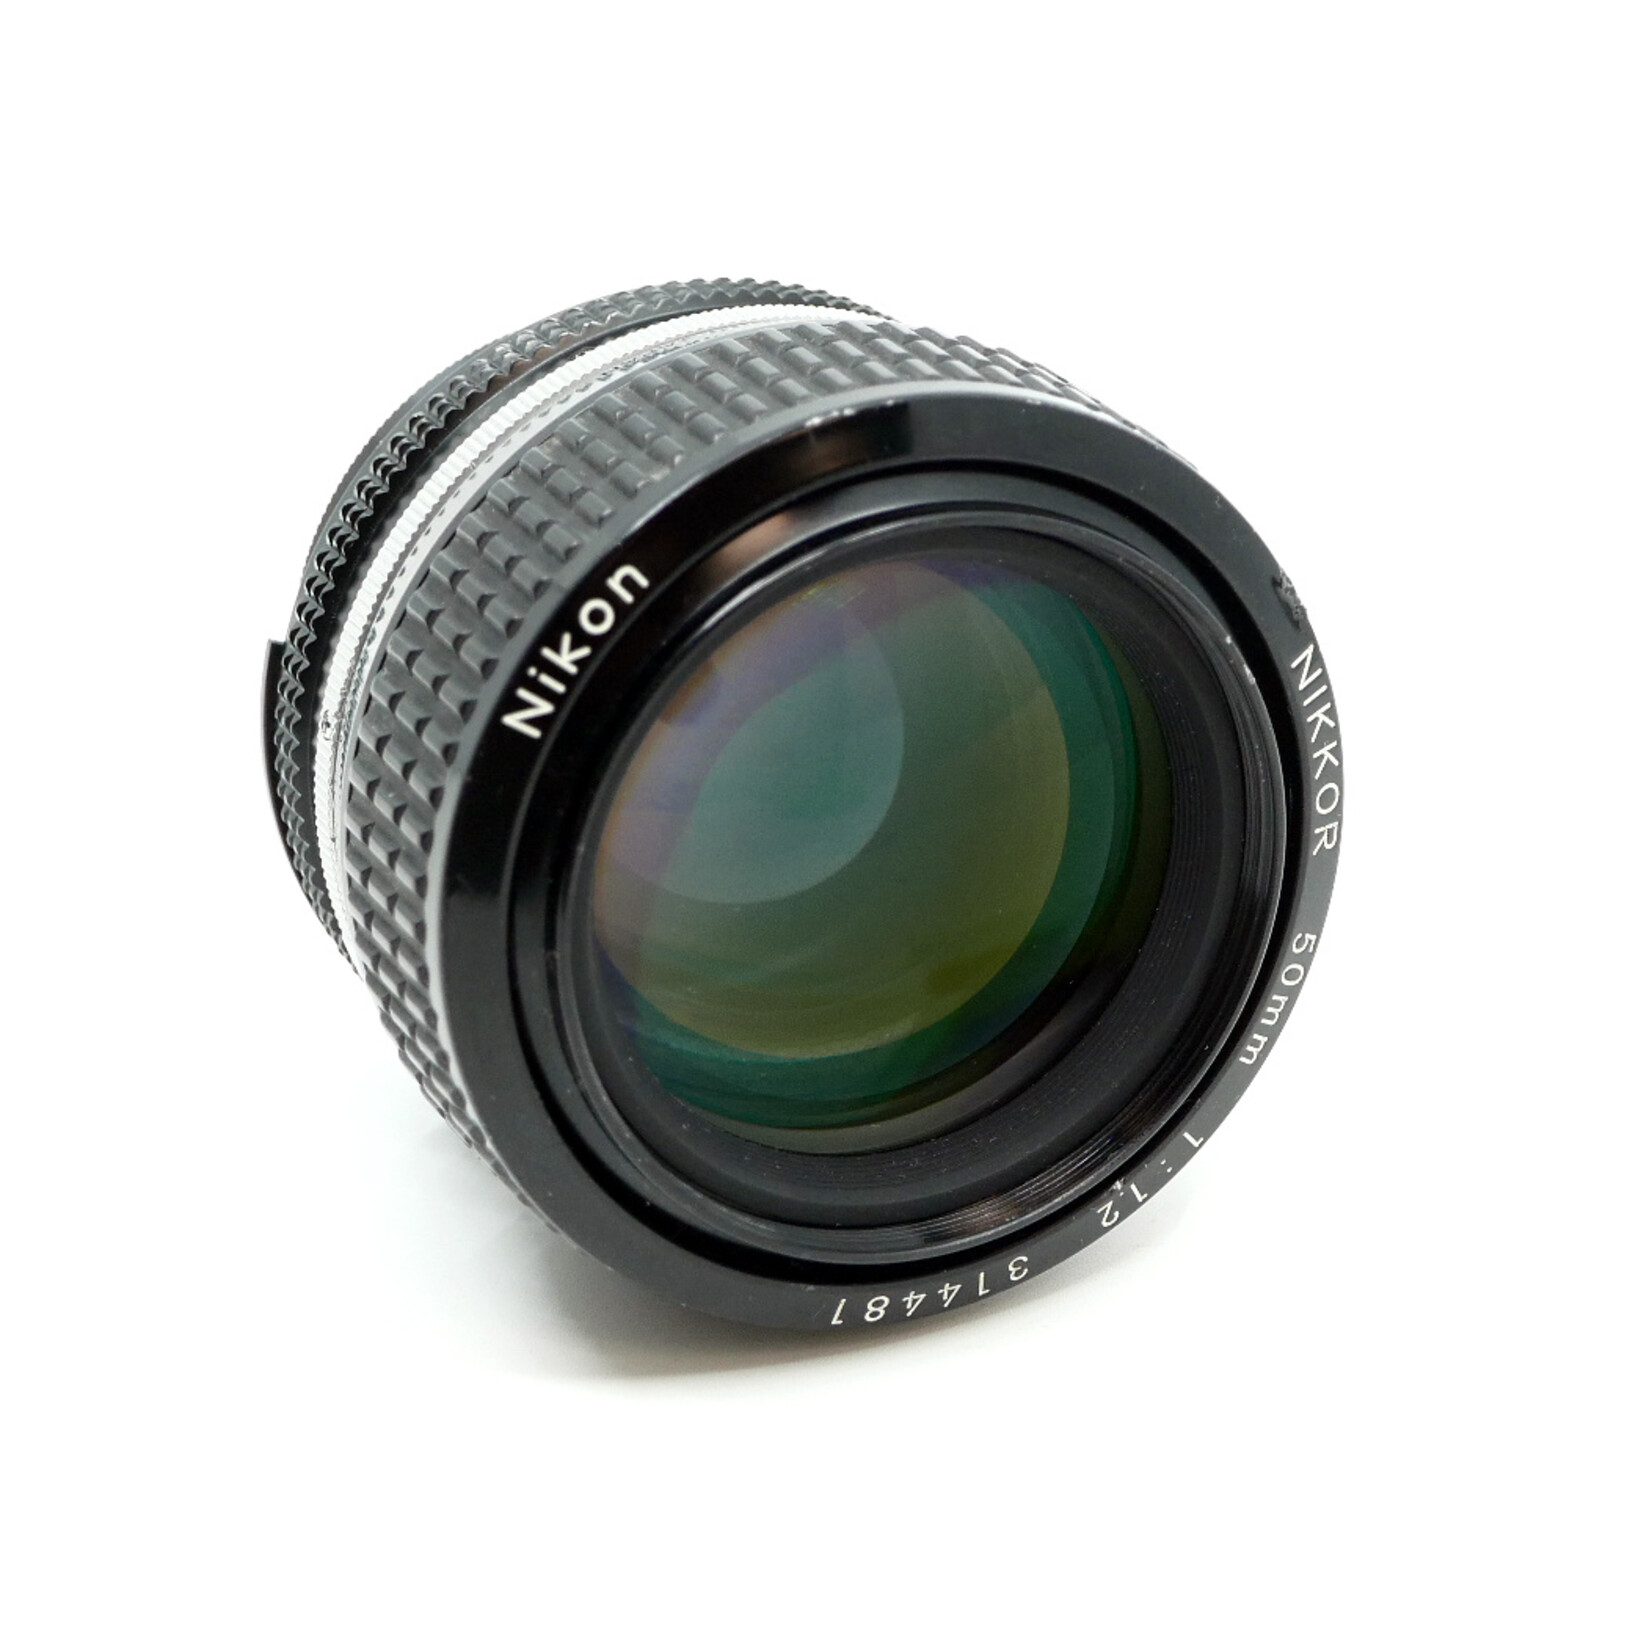 Nikon Nikkor 50mm f/1.2 AIS (Used)